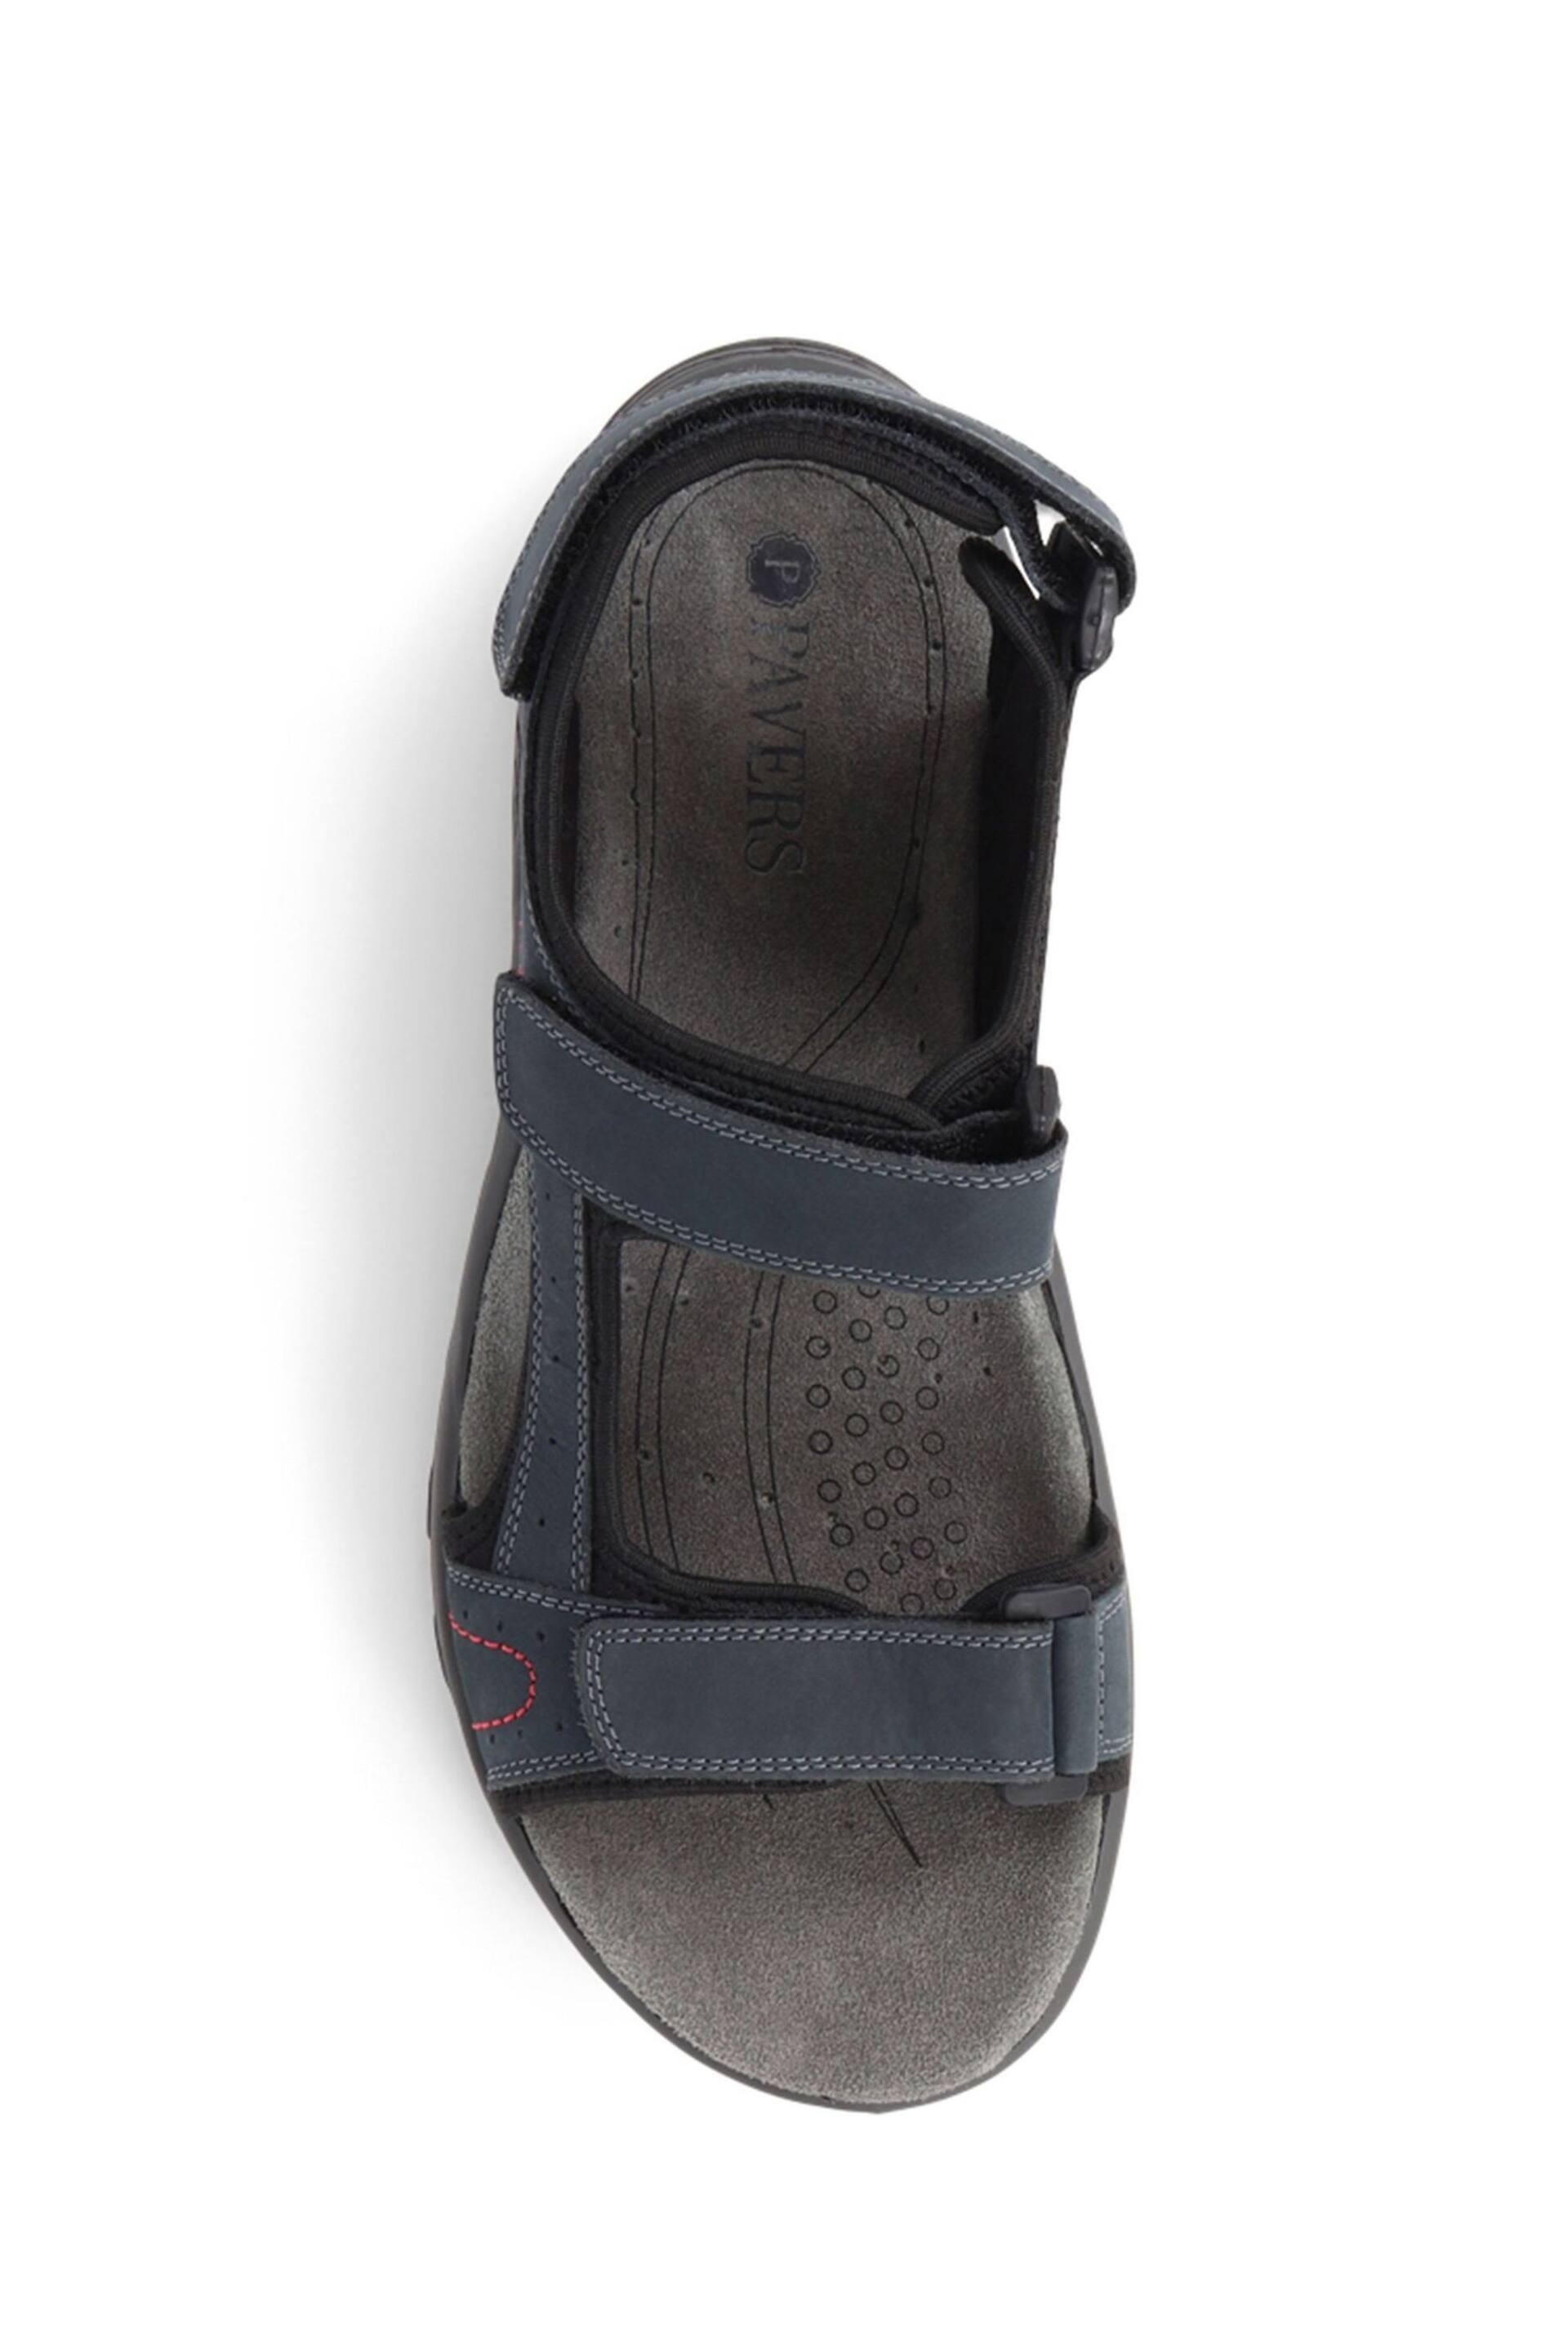 Pavers Adjustable Leather Walking Sandals - Image 4 of 5